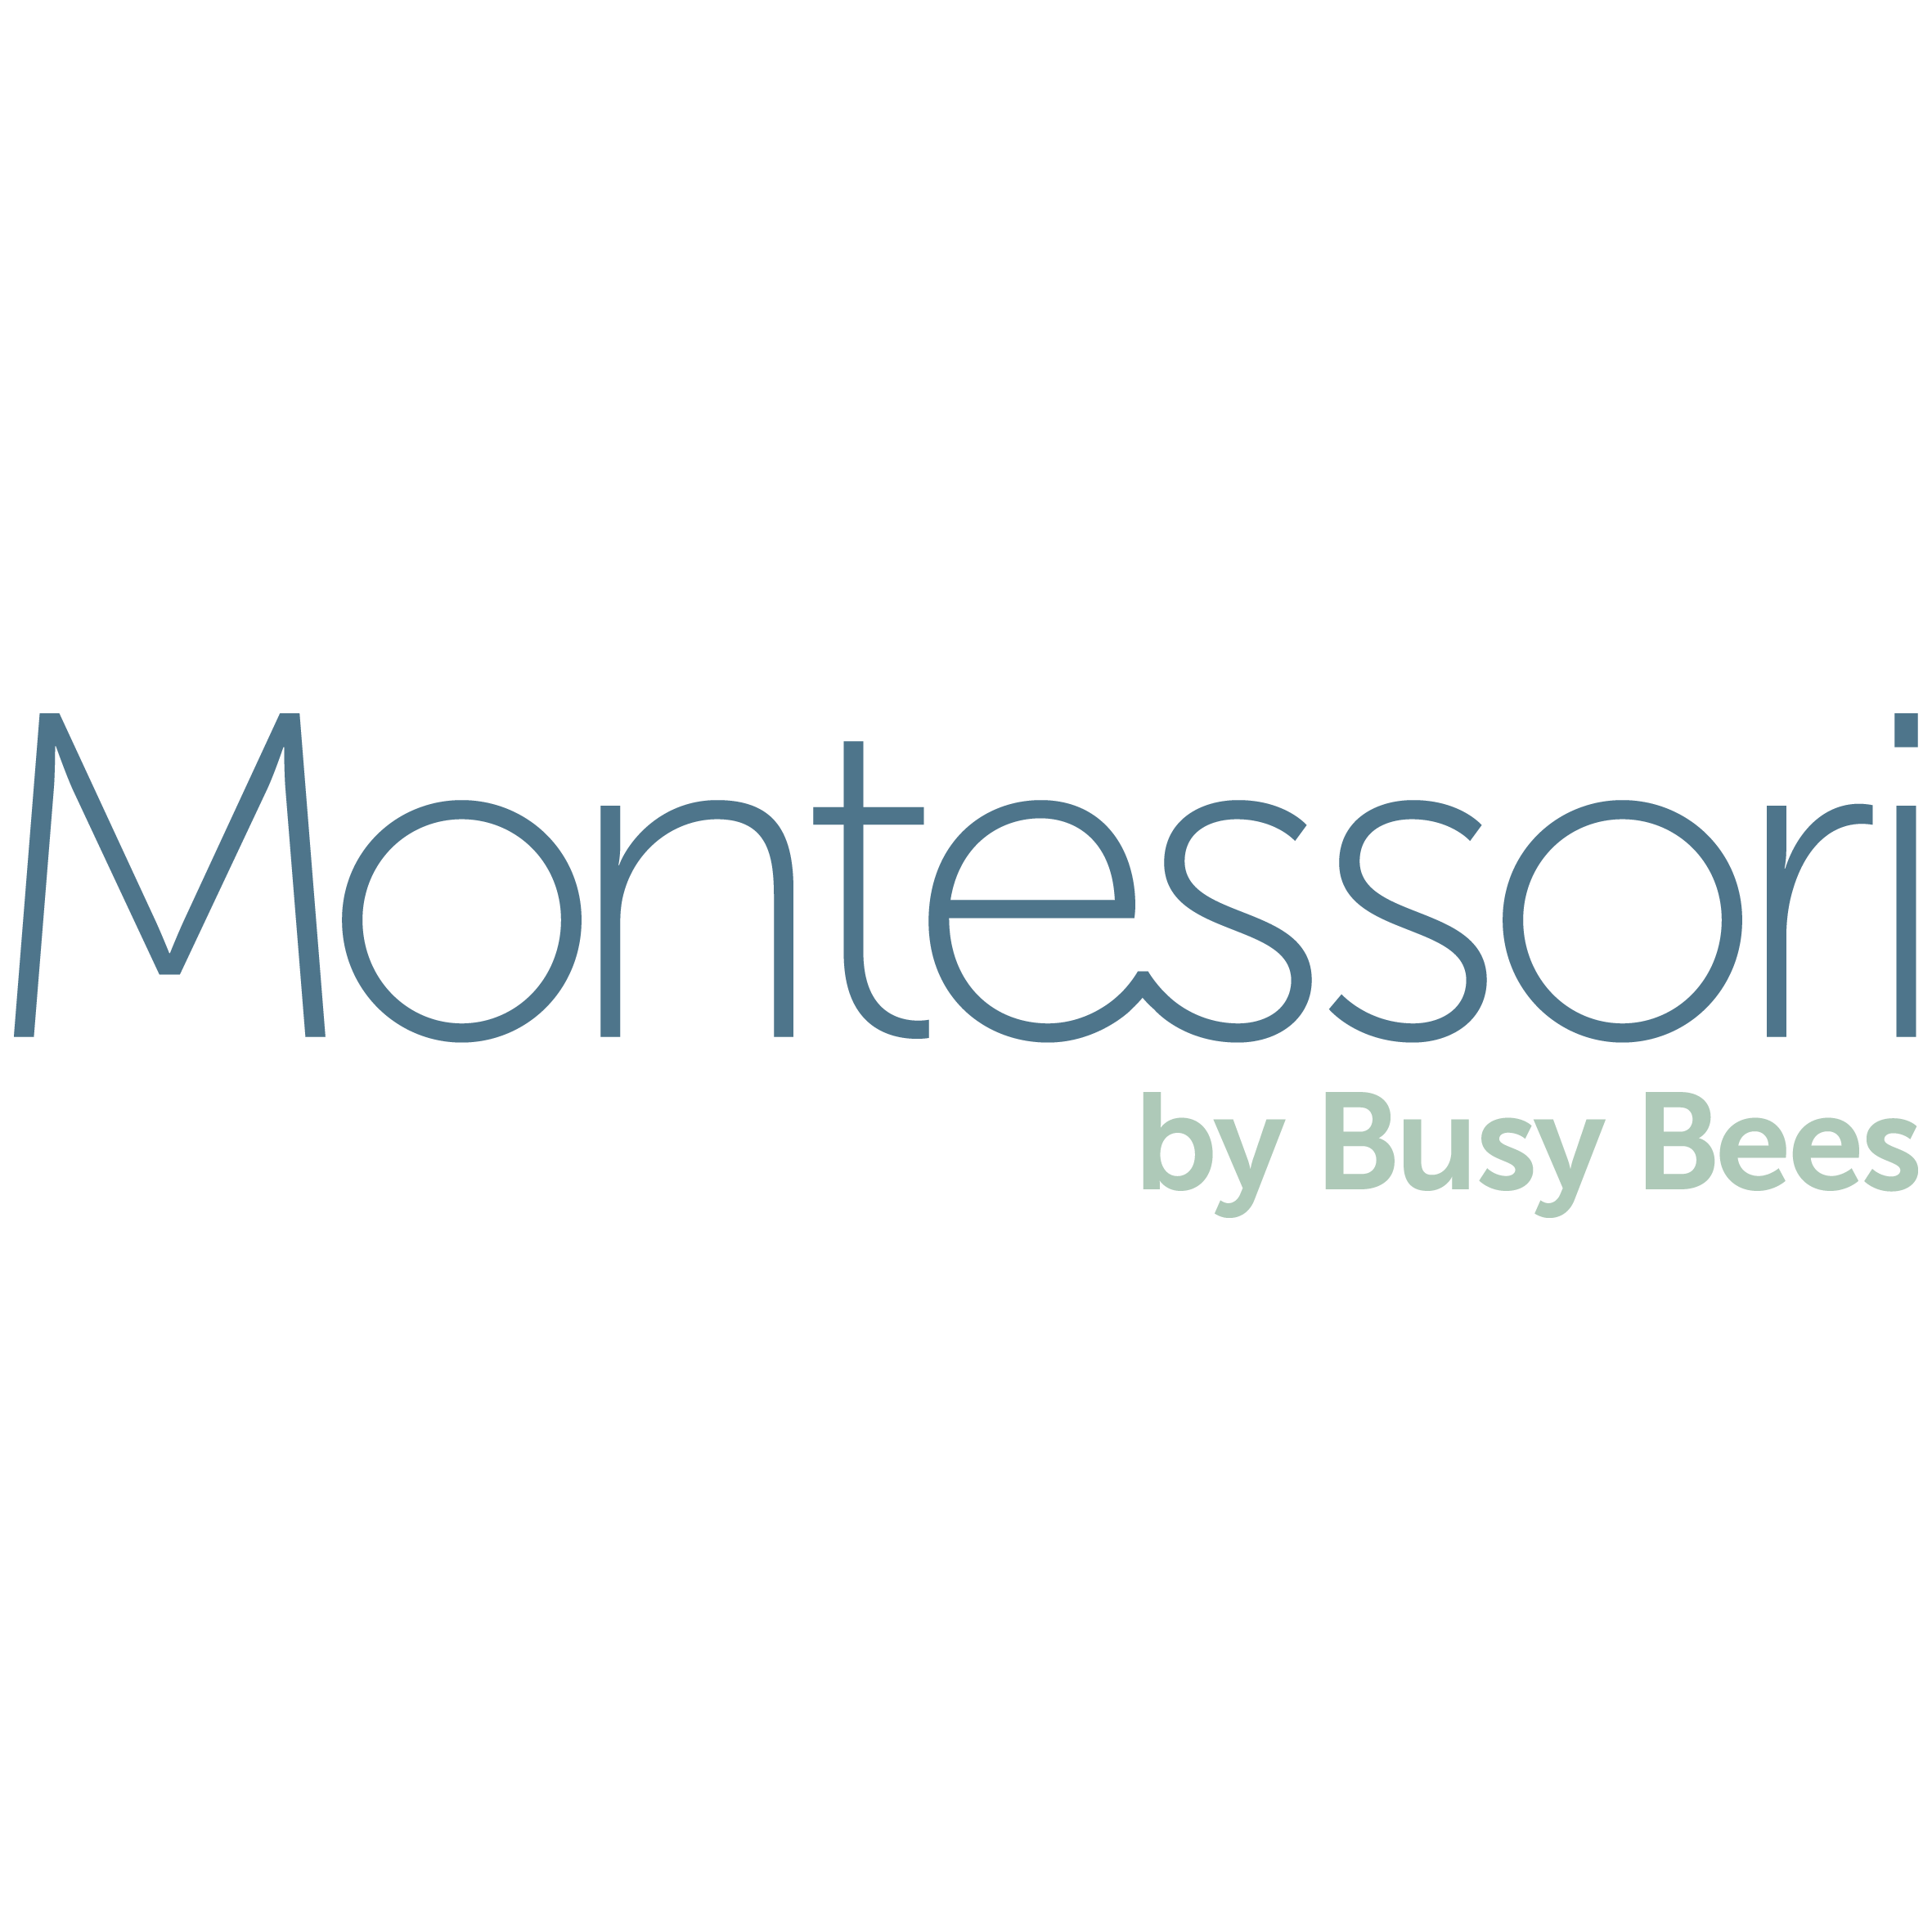 Montessori by Busy Bees in Harrow Marlborough Hill - Harrow, London HA1 1TX - 020 8861 5780 | ShowMeLocal.com